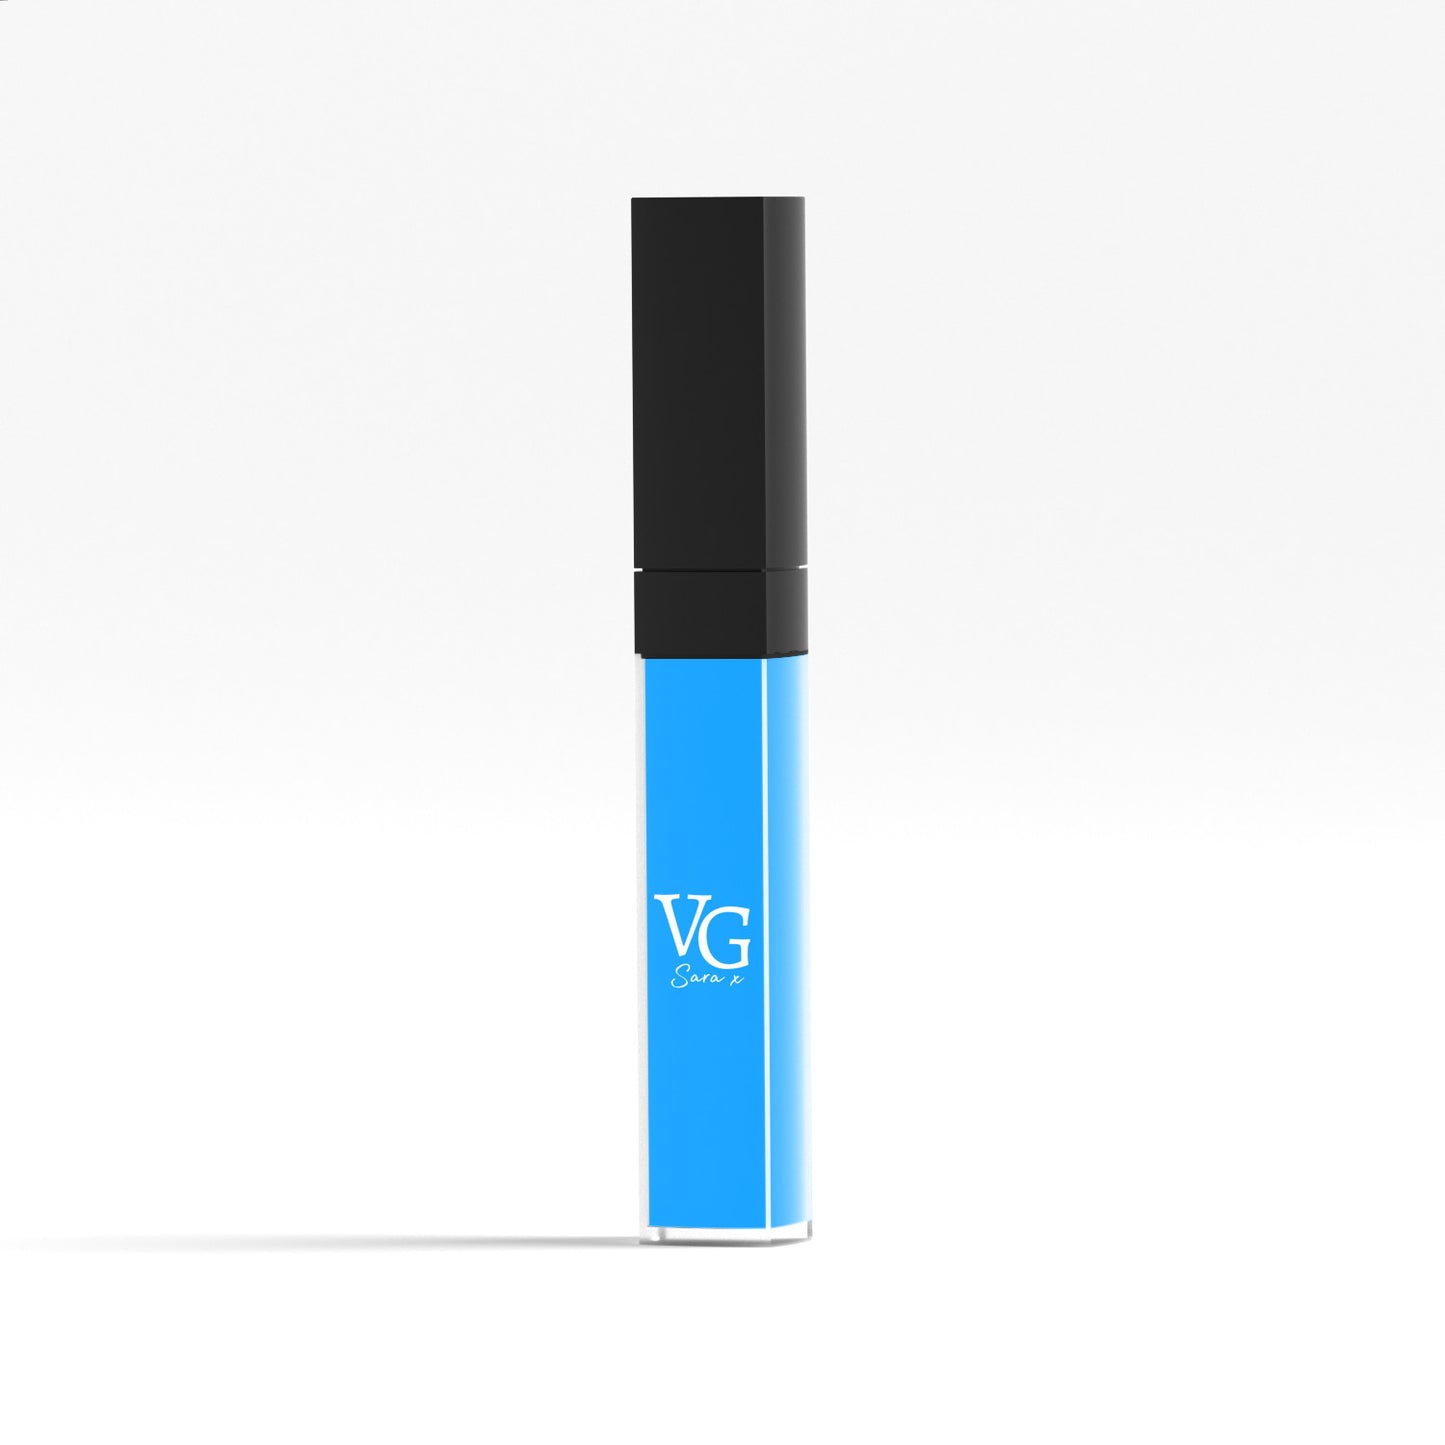 Sapphire blue vegan lip gloss from the VG cosmetics line